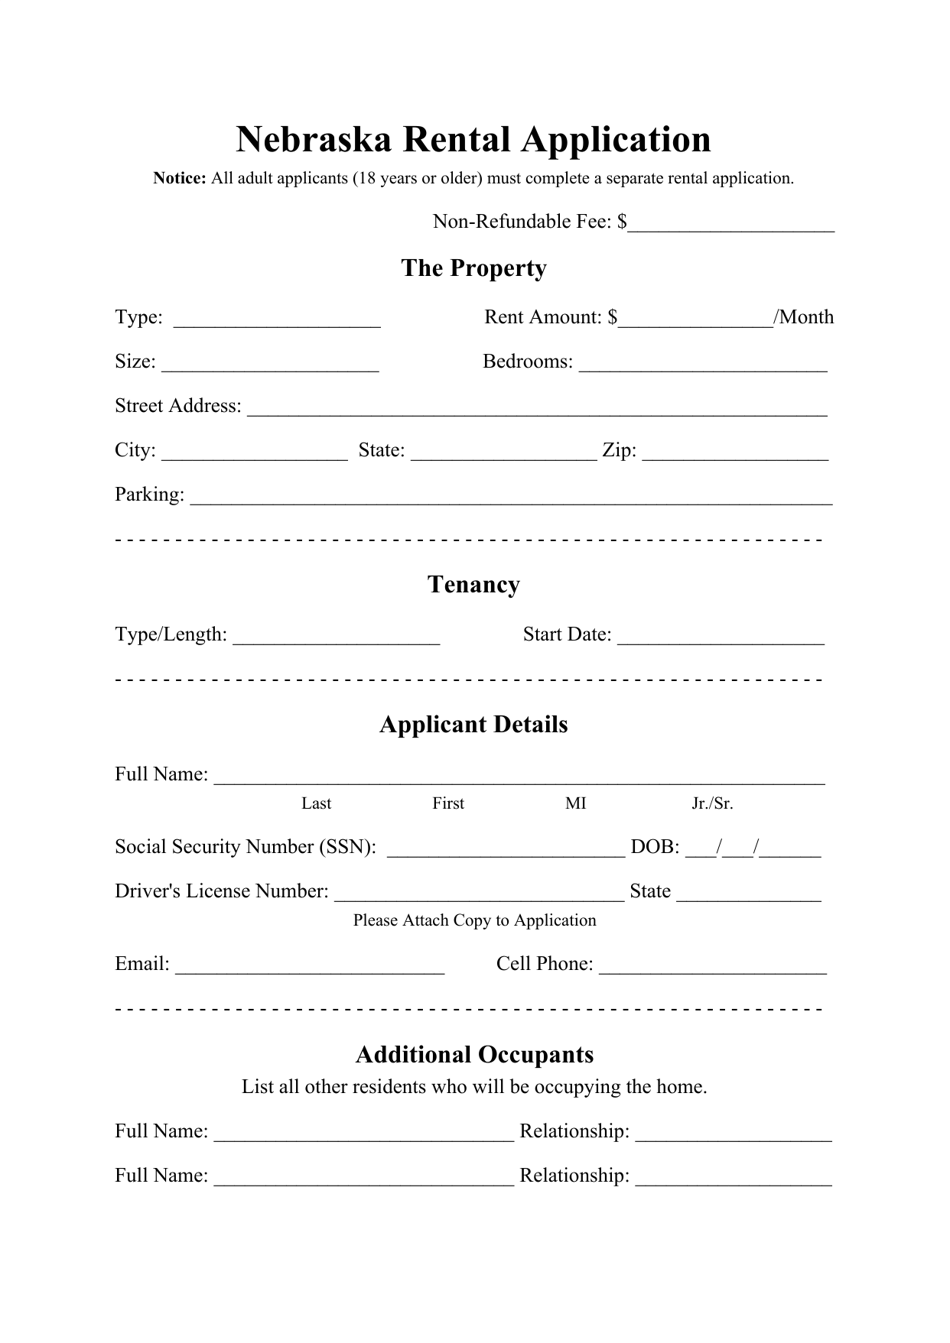 Rental Application Form - Nebraska, Page 1